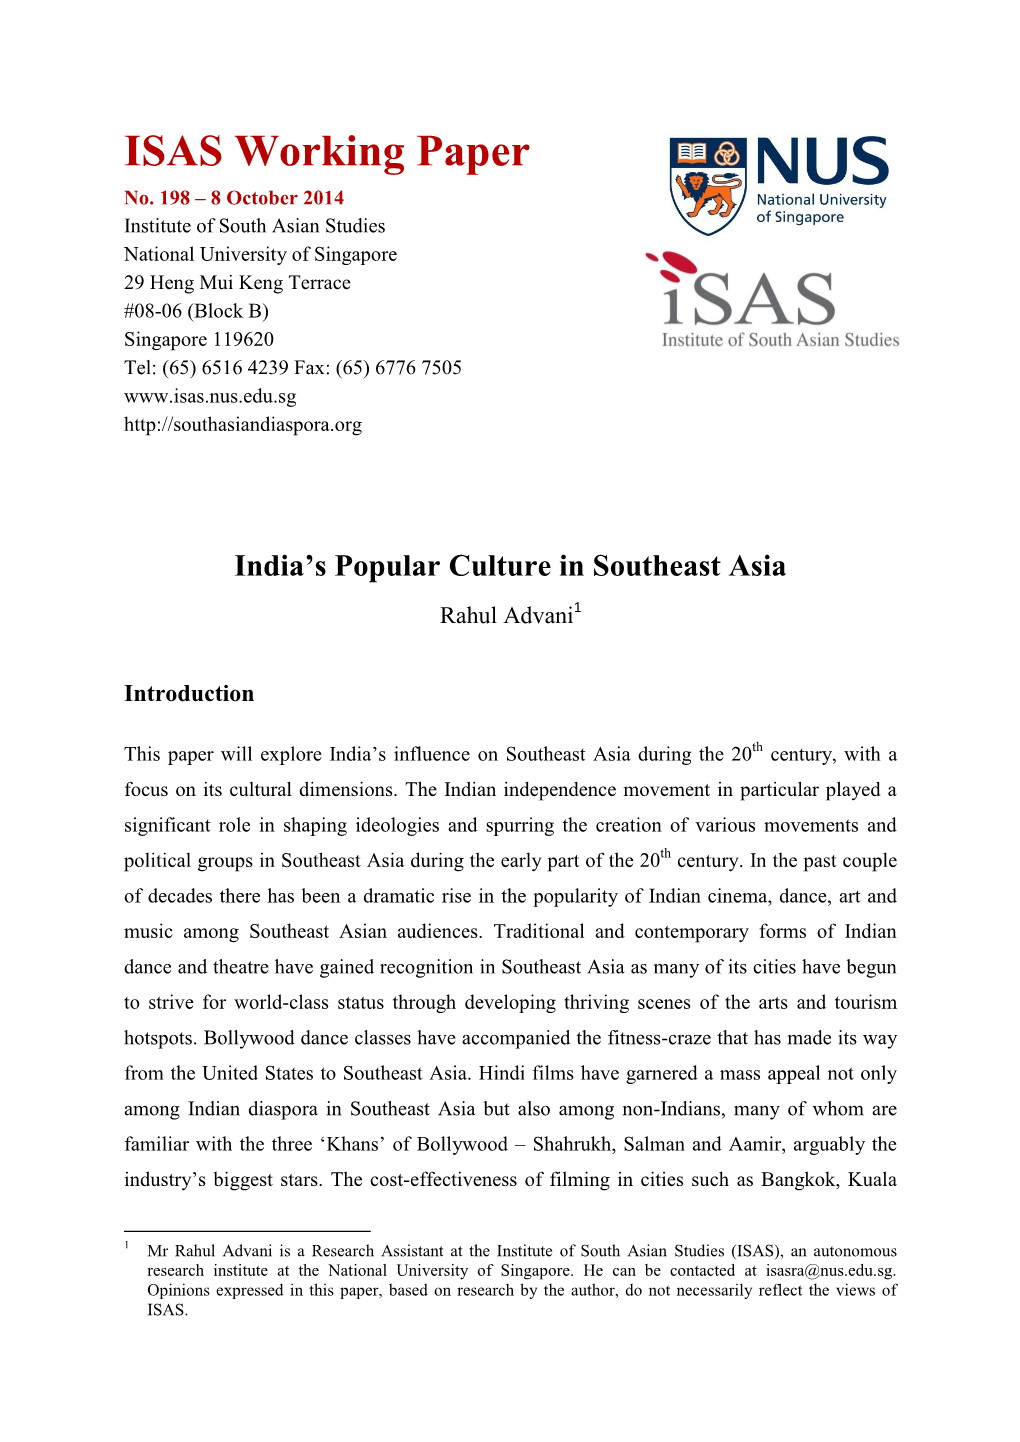 India's Popular Culture in Southeast Asia